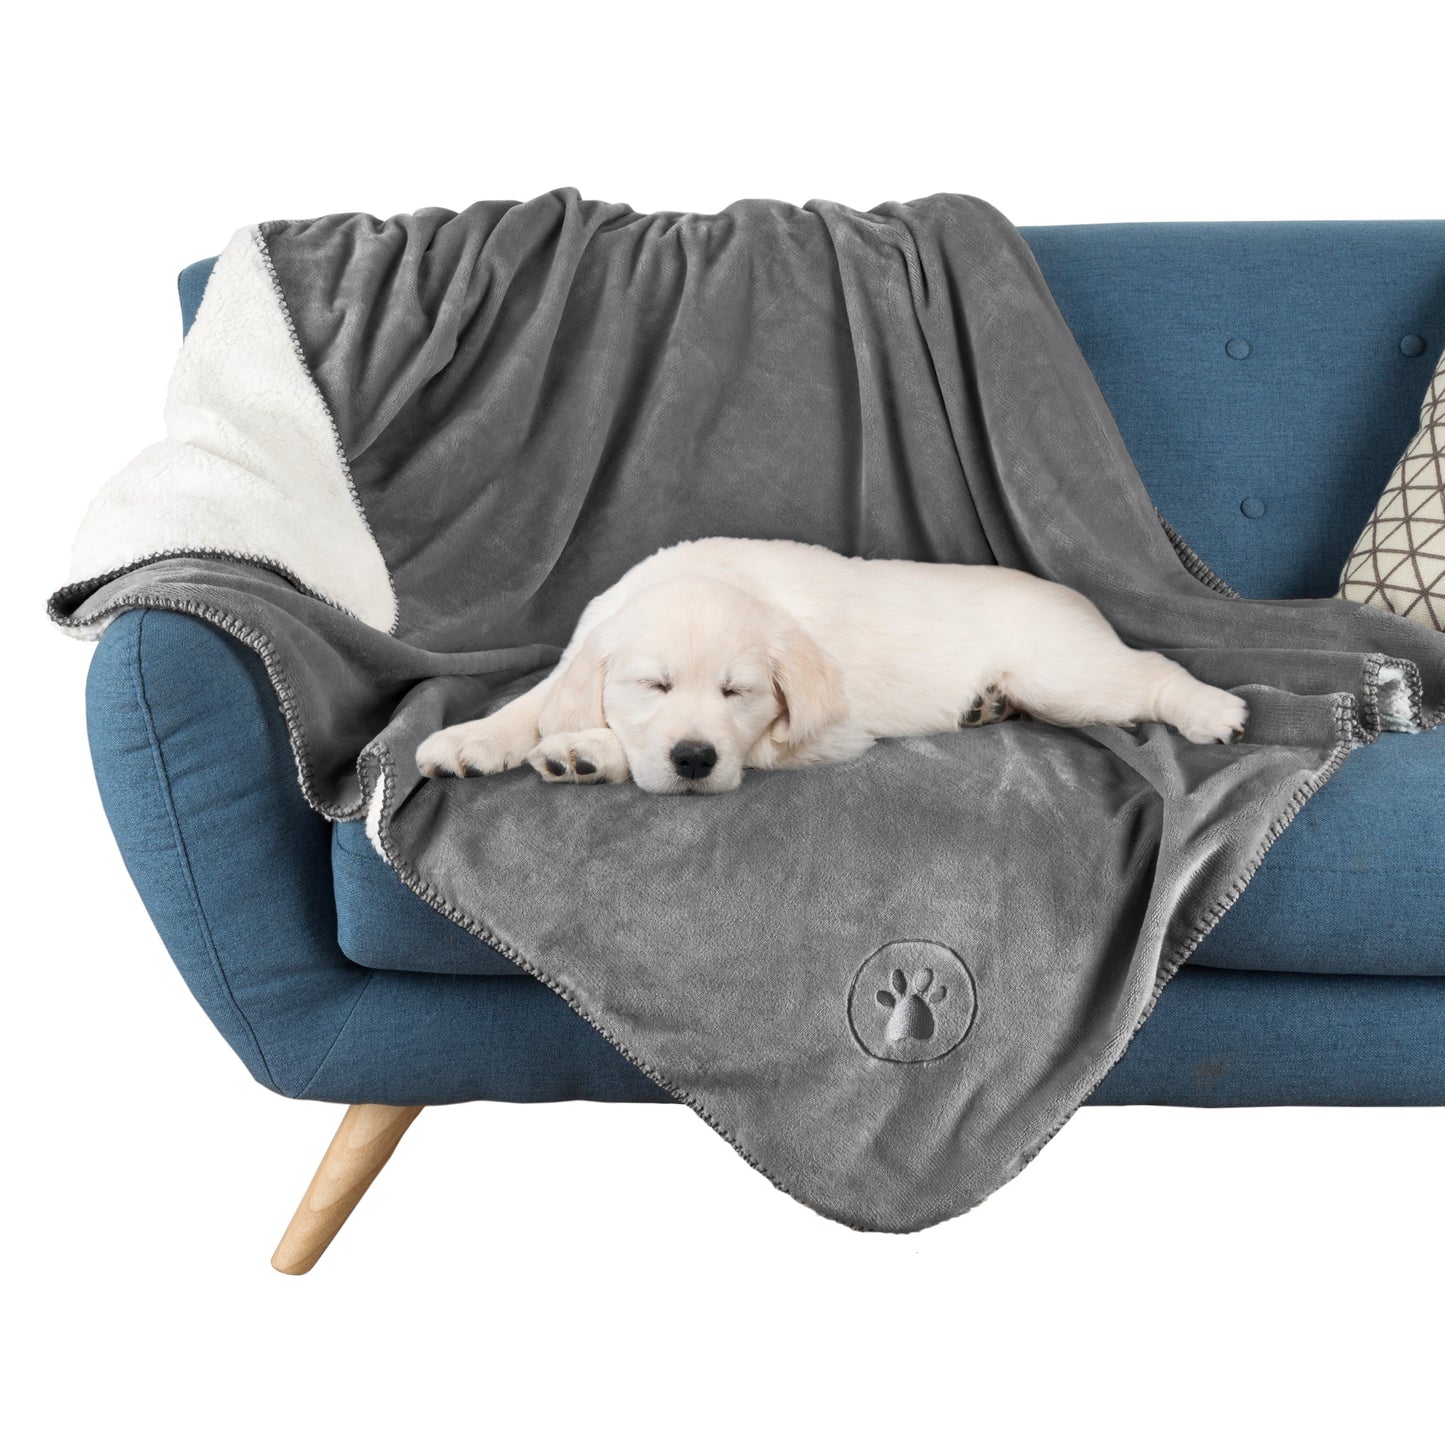 PETMAKER 50x60-Inch Waterproof Dog Blanket, Gray